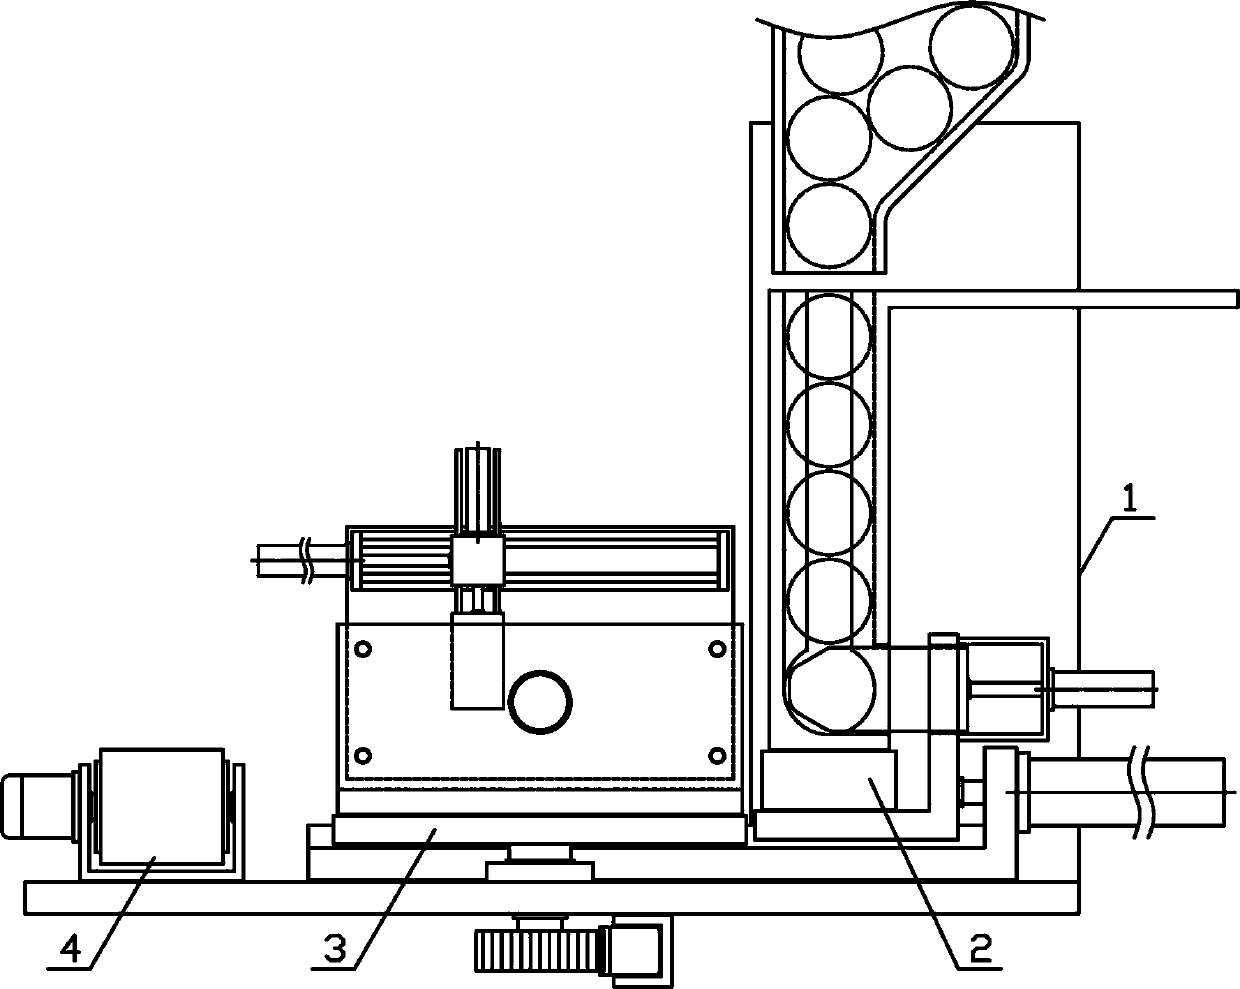 Sheet workpiece continuous feeding mechanism